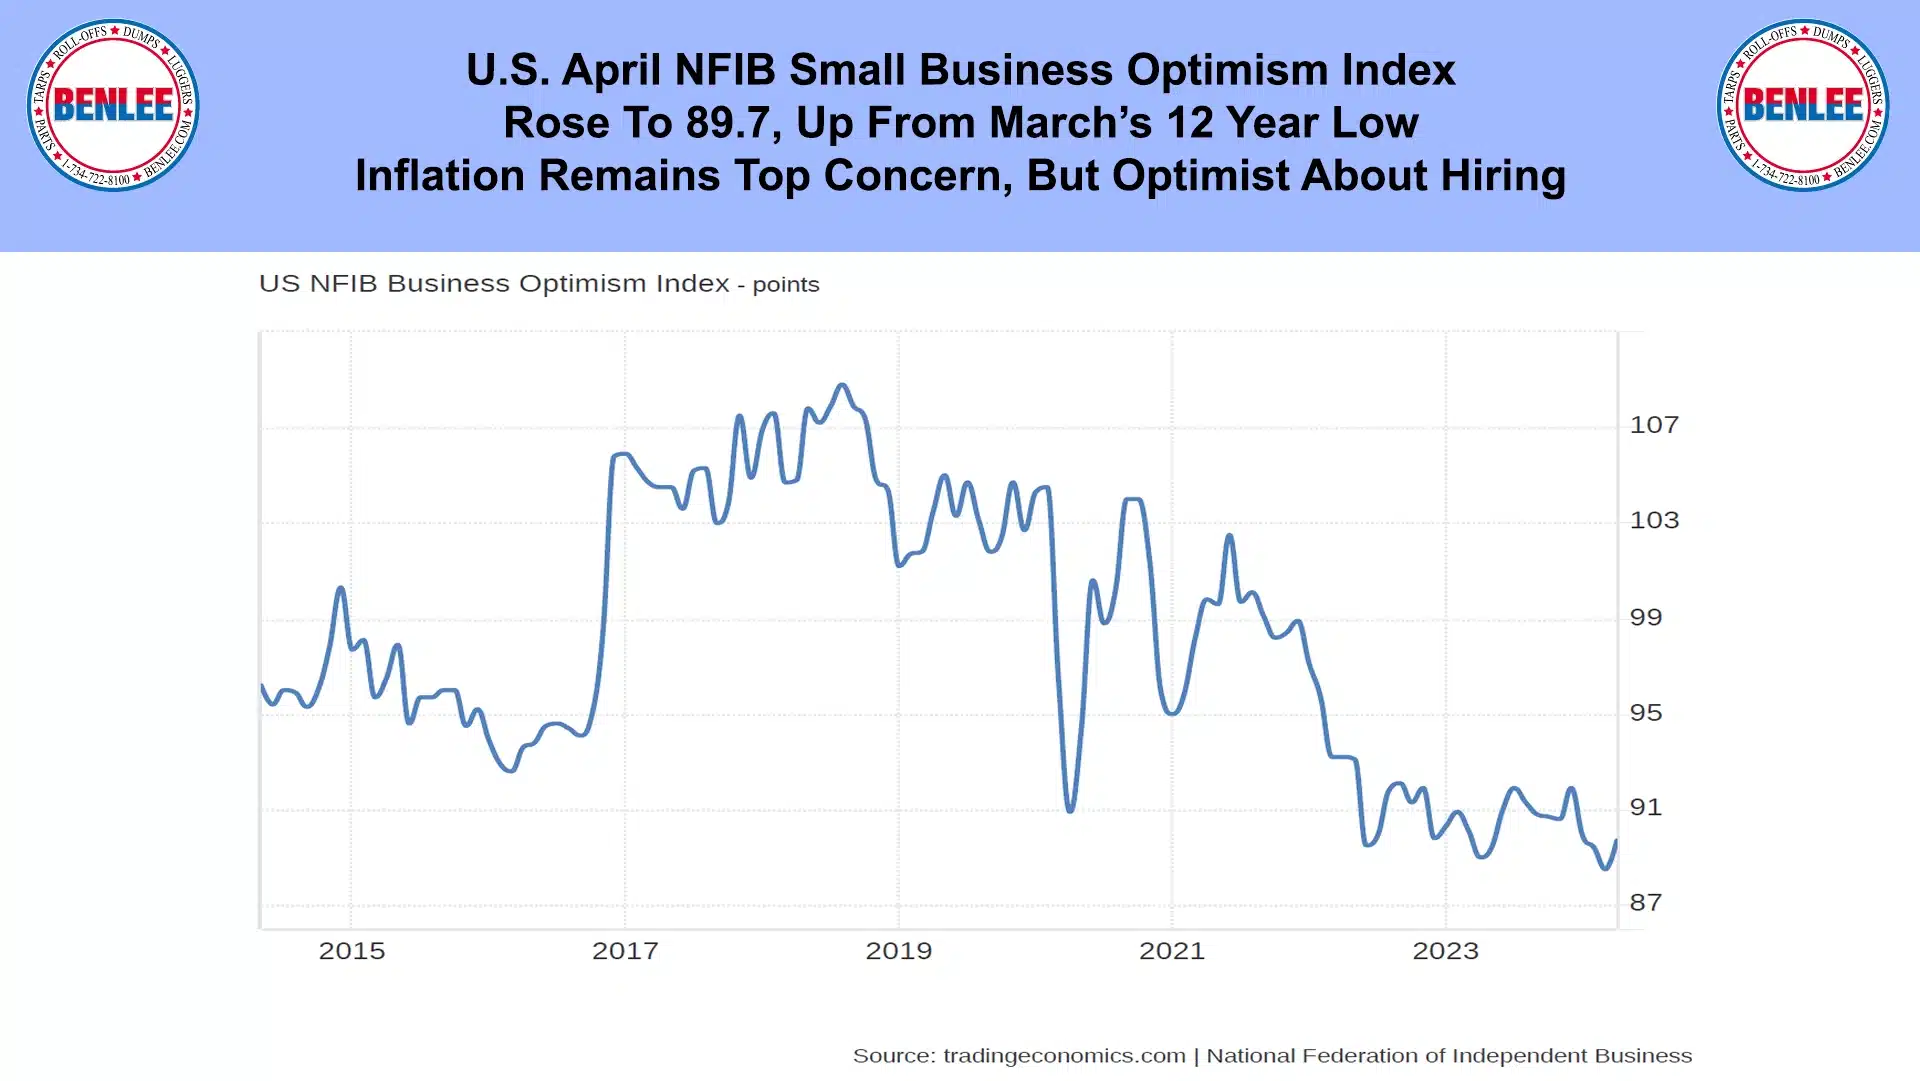 U.S. April NFIB Small Business Optimism Index